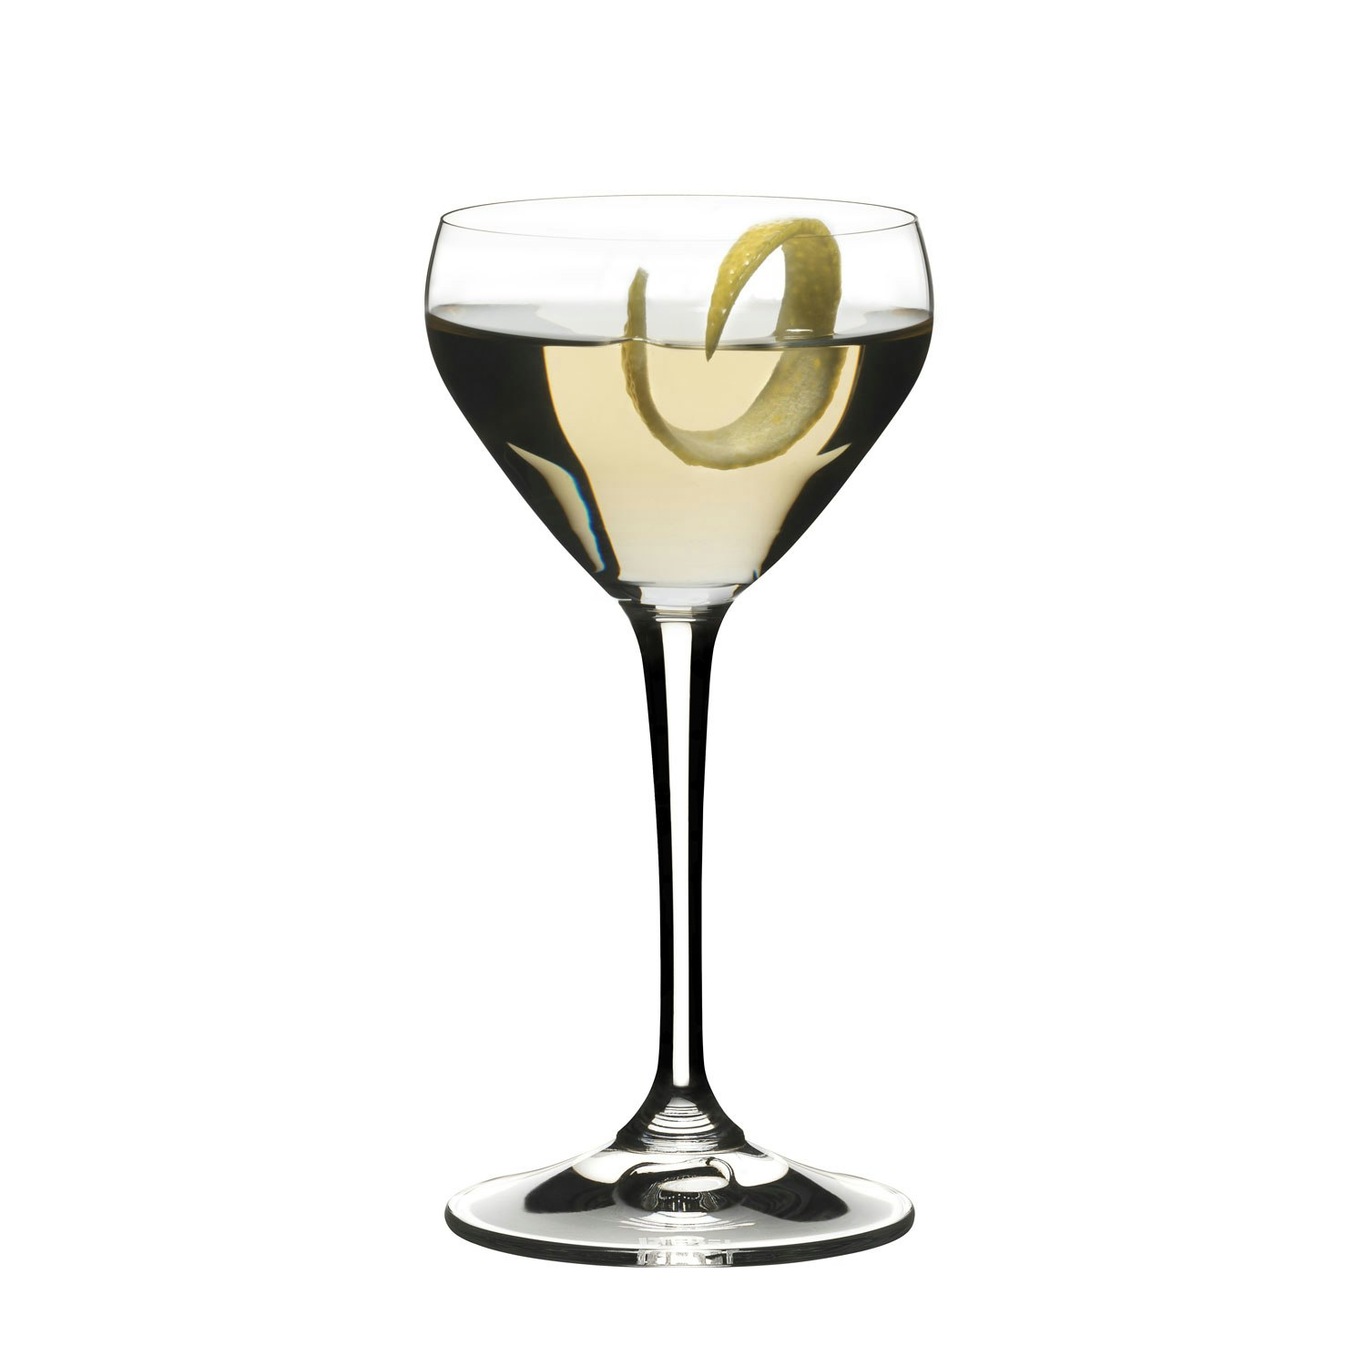 https://royaldesign.com/image/10/riedel-nick-nora-martini-glass-pack-of-2-0?w=800&quality=80